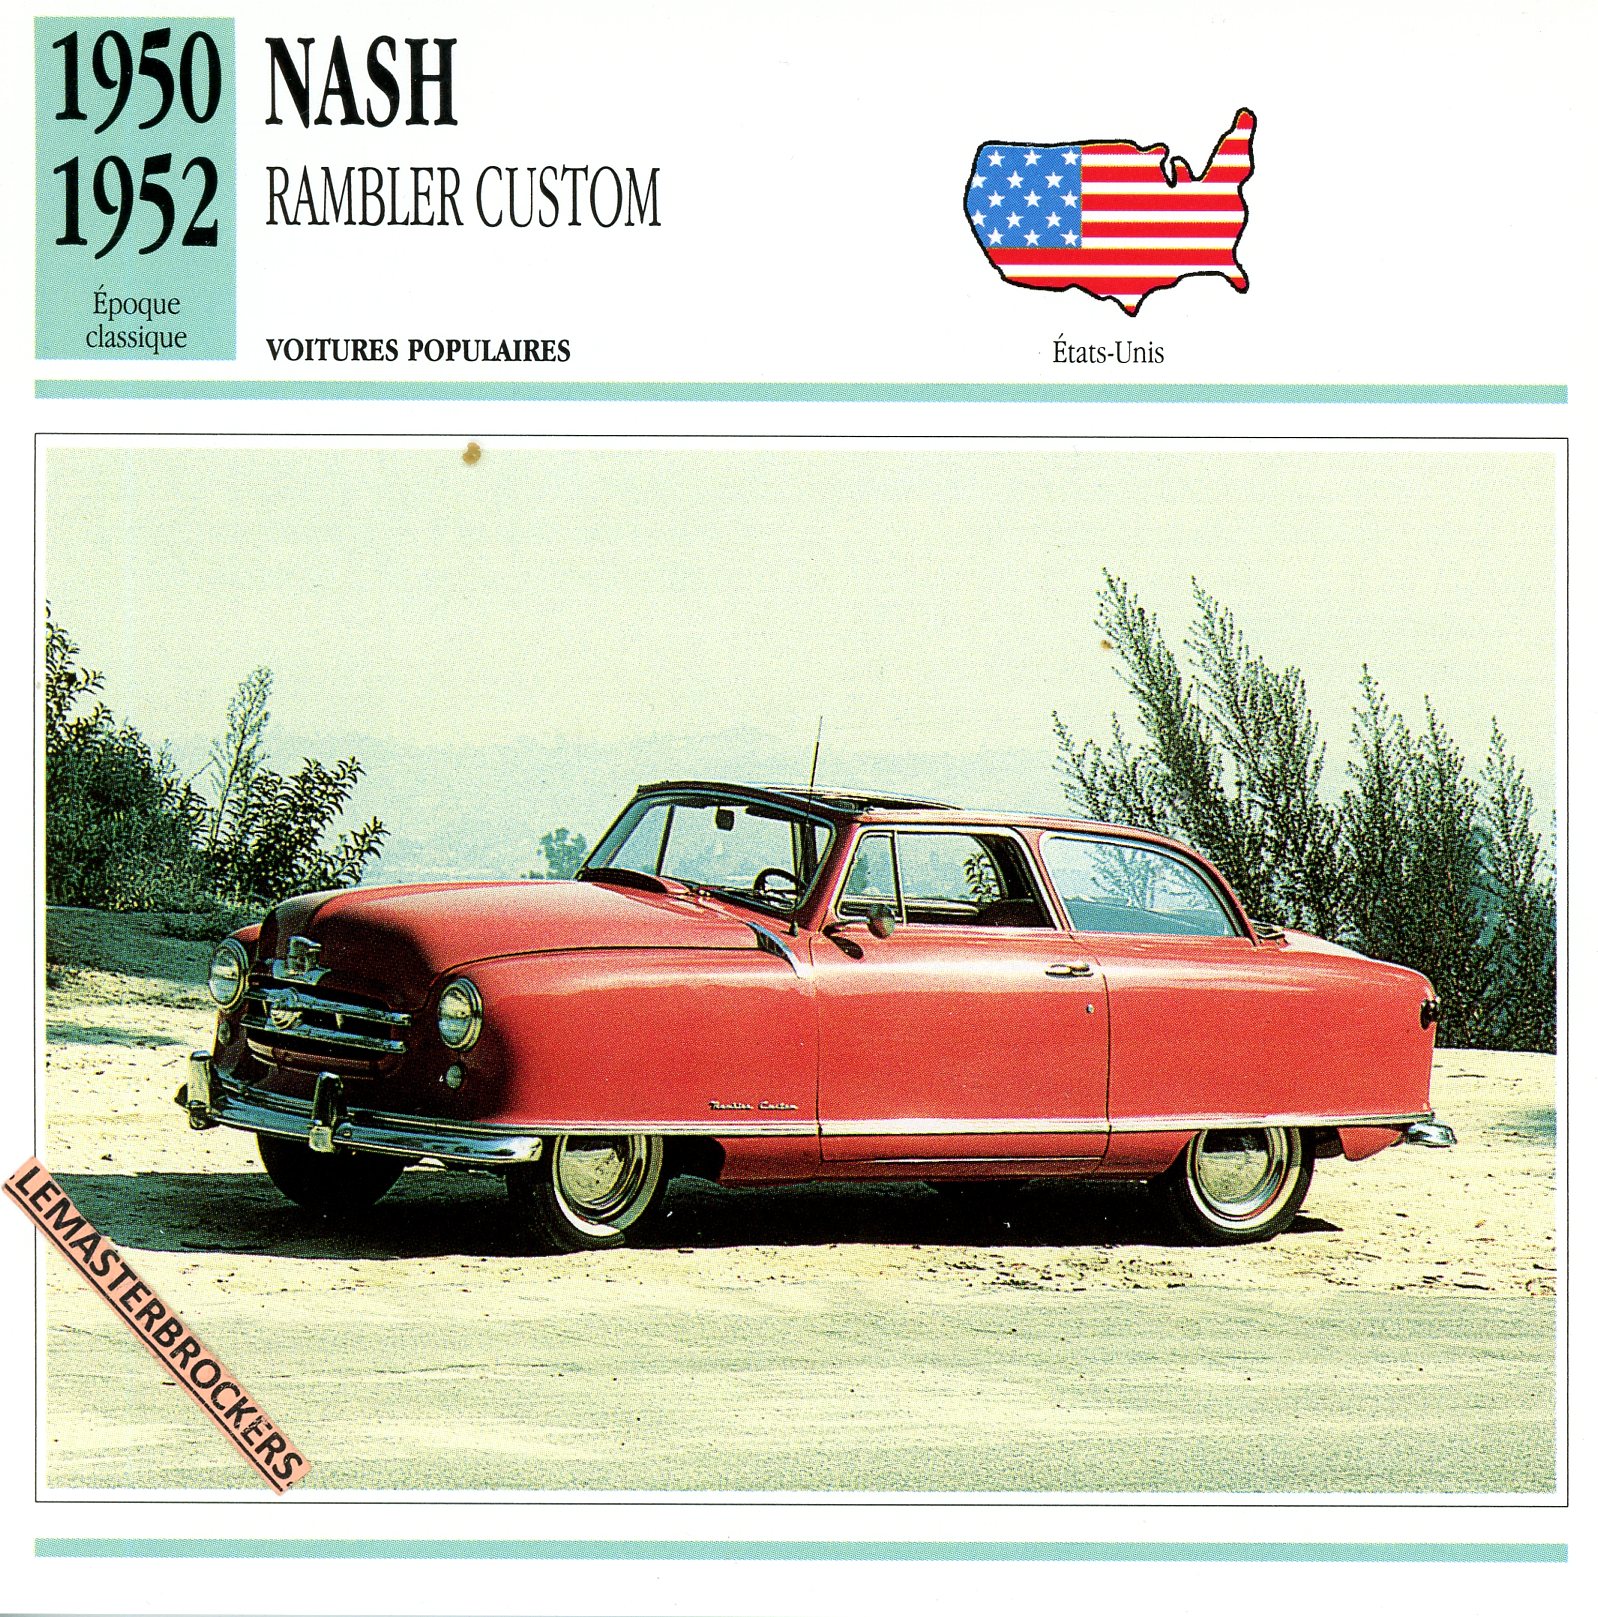 NASH-RAMBLER-CUSTOM-1950-LEMASTERBROCKERS-CARS-CARD-FICHE-AUTO